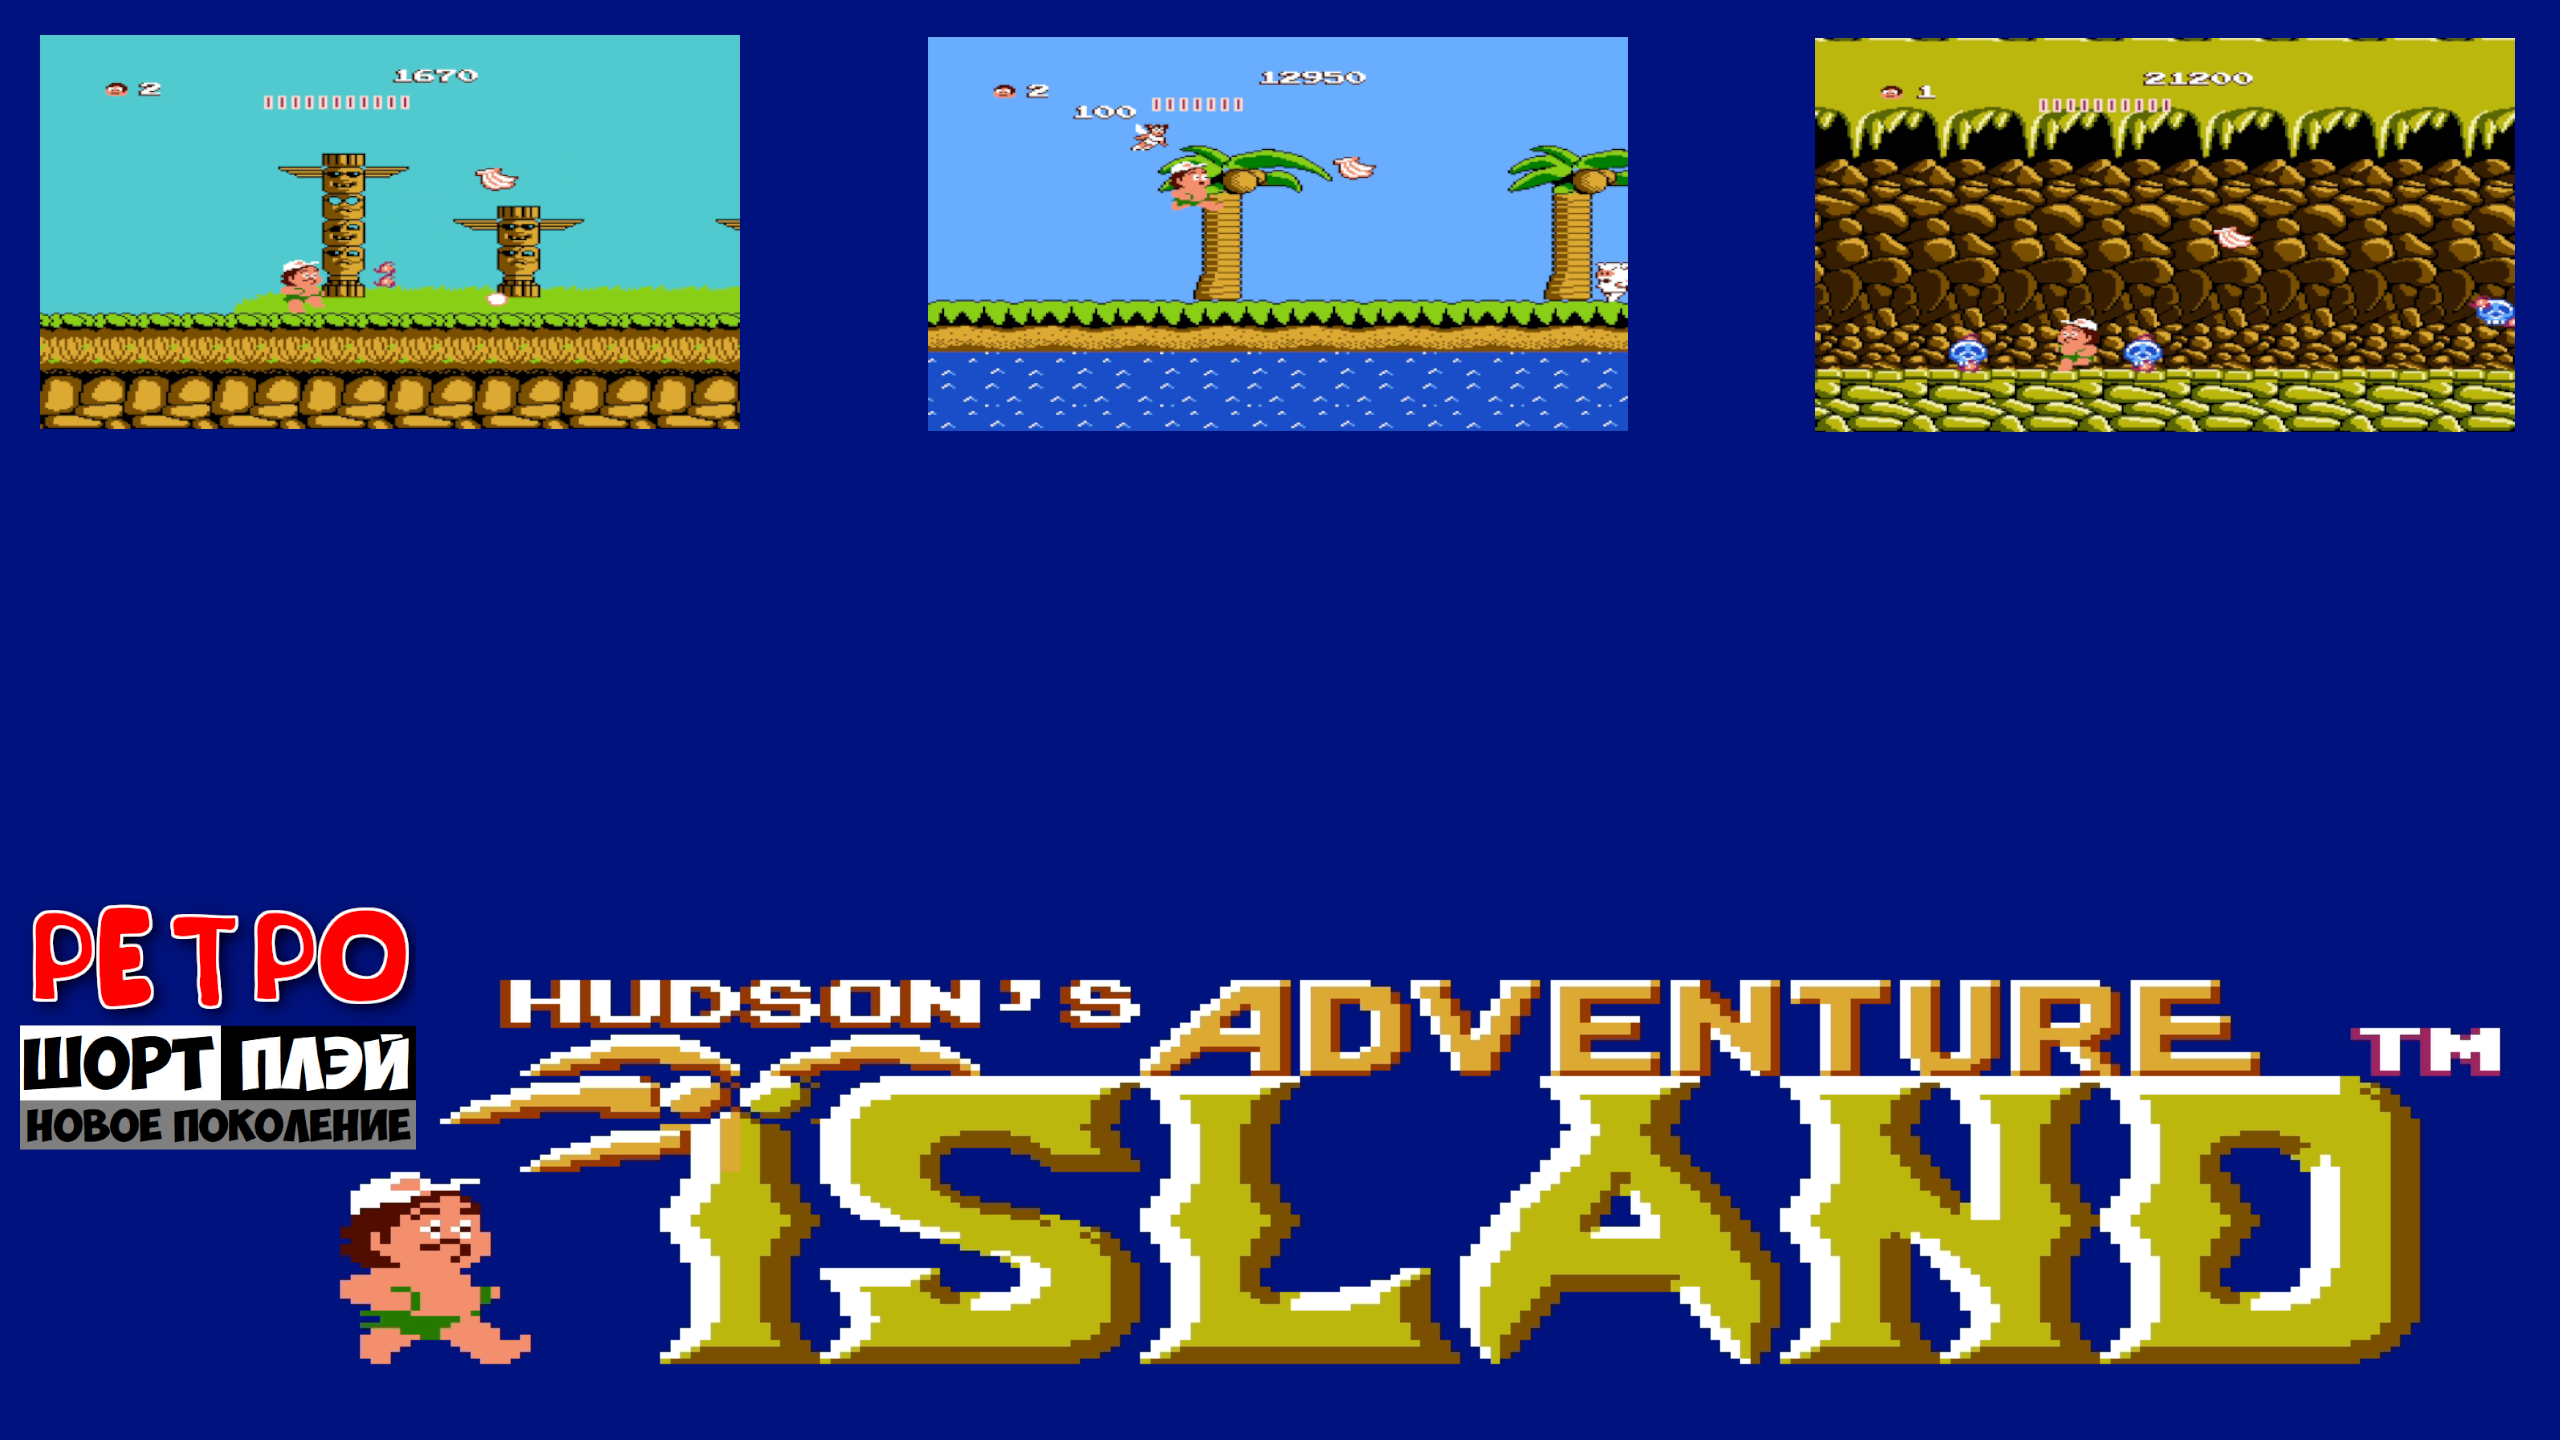 Ретро ШортПлэй: Adventure Island (NES, 1986)